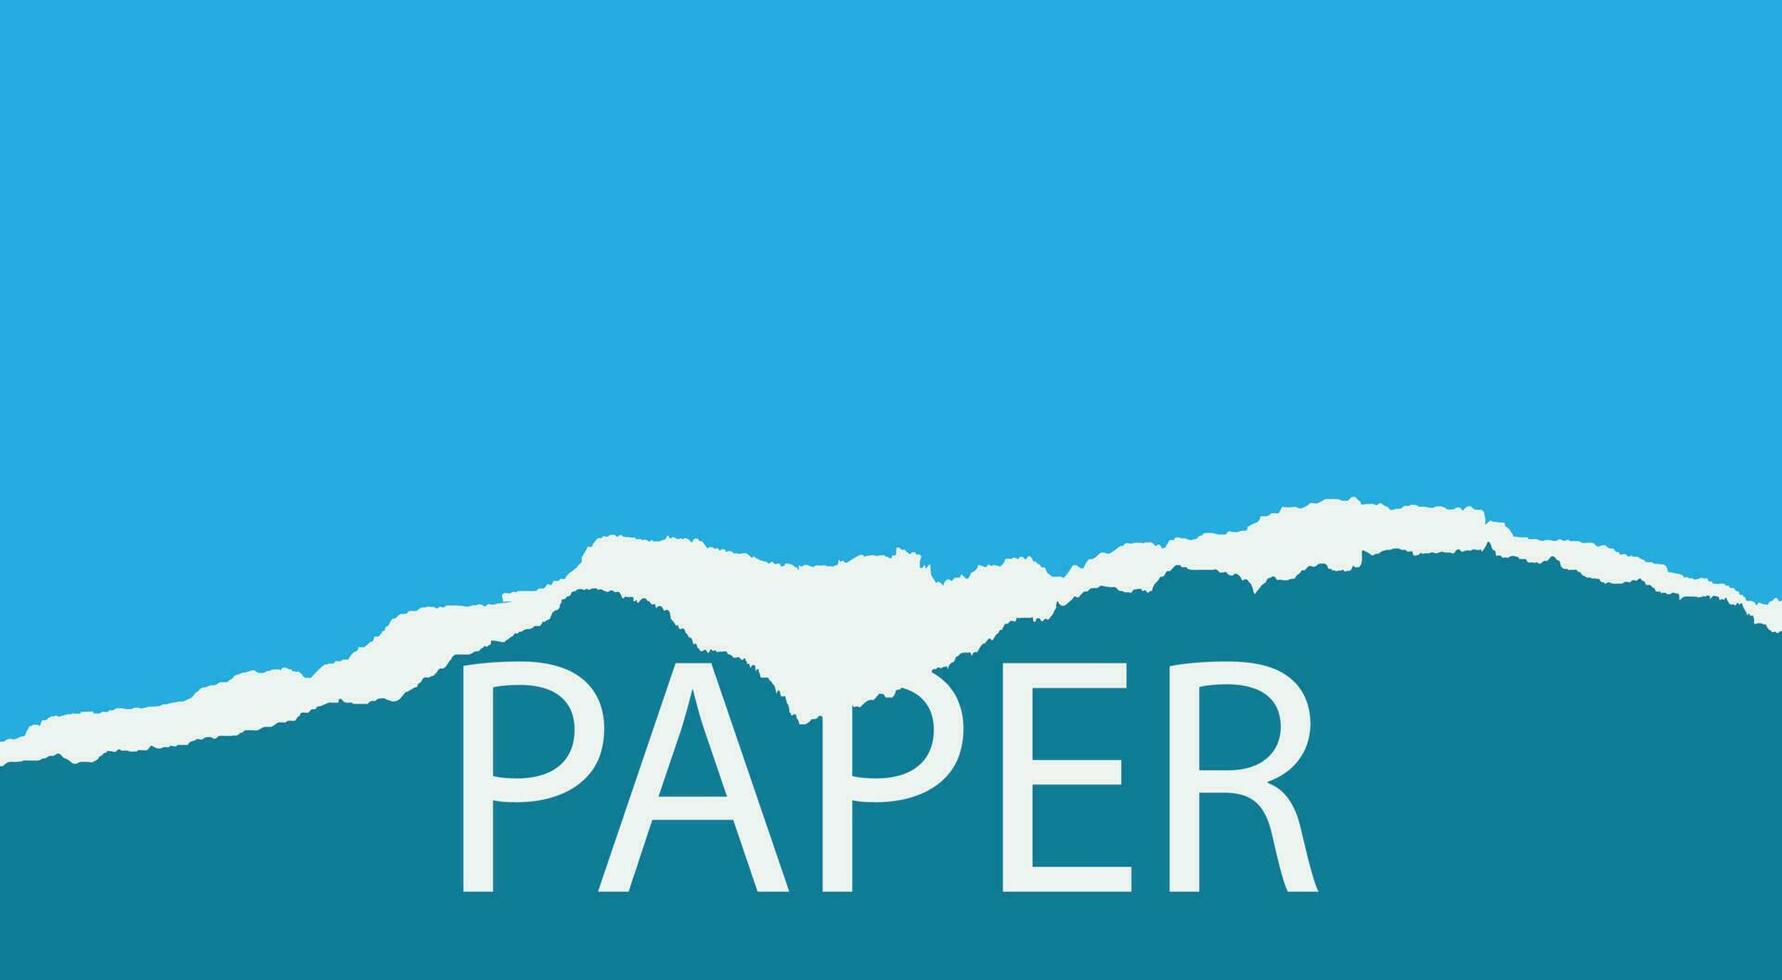 Torn paper design vector background